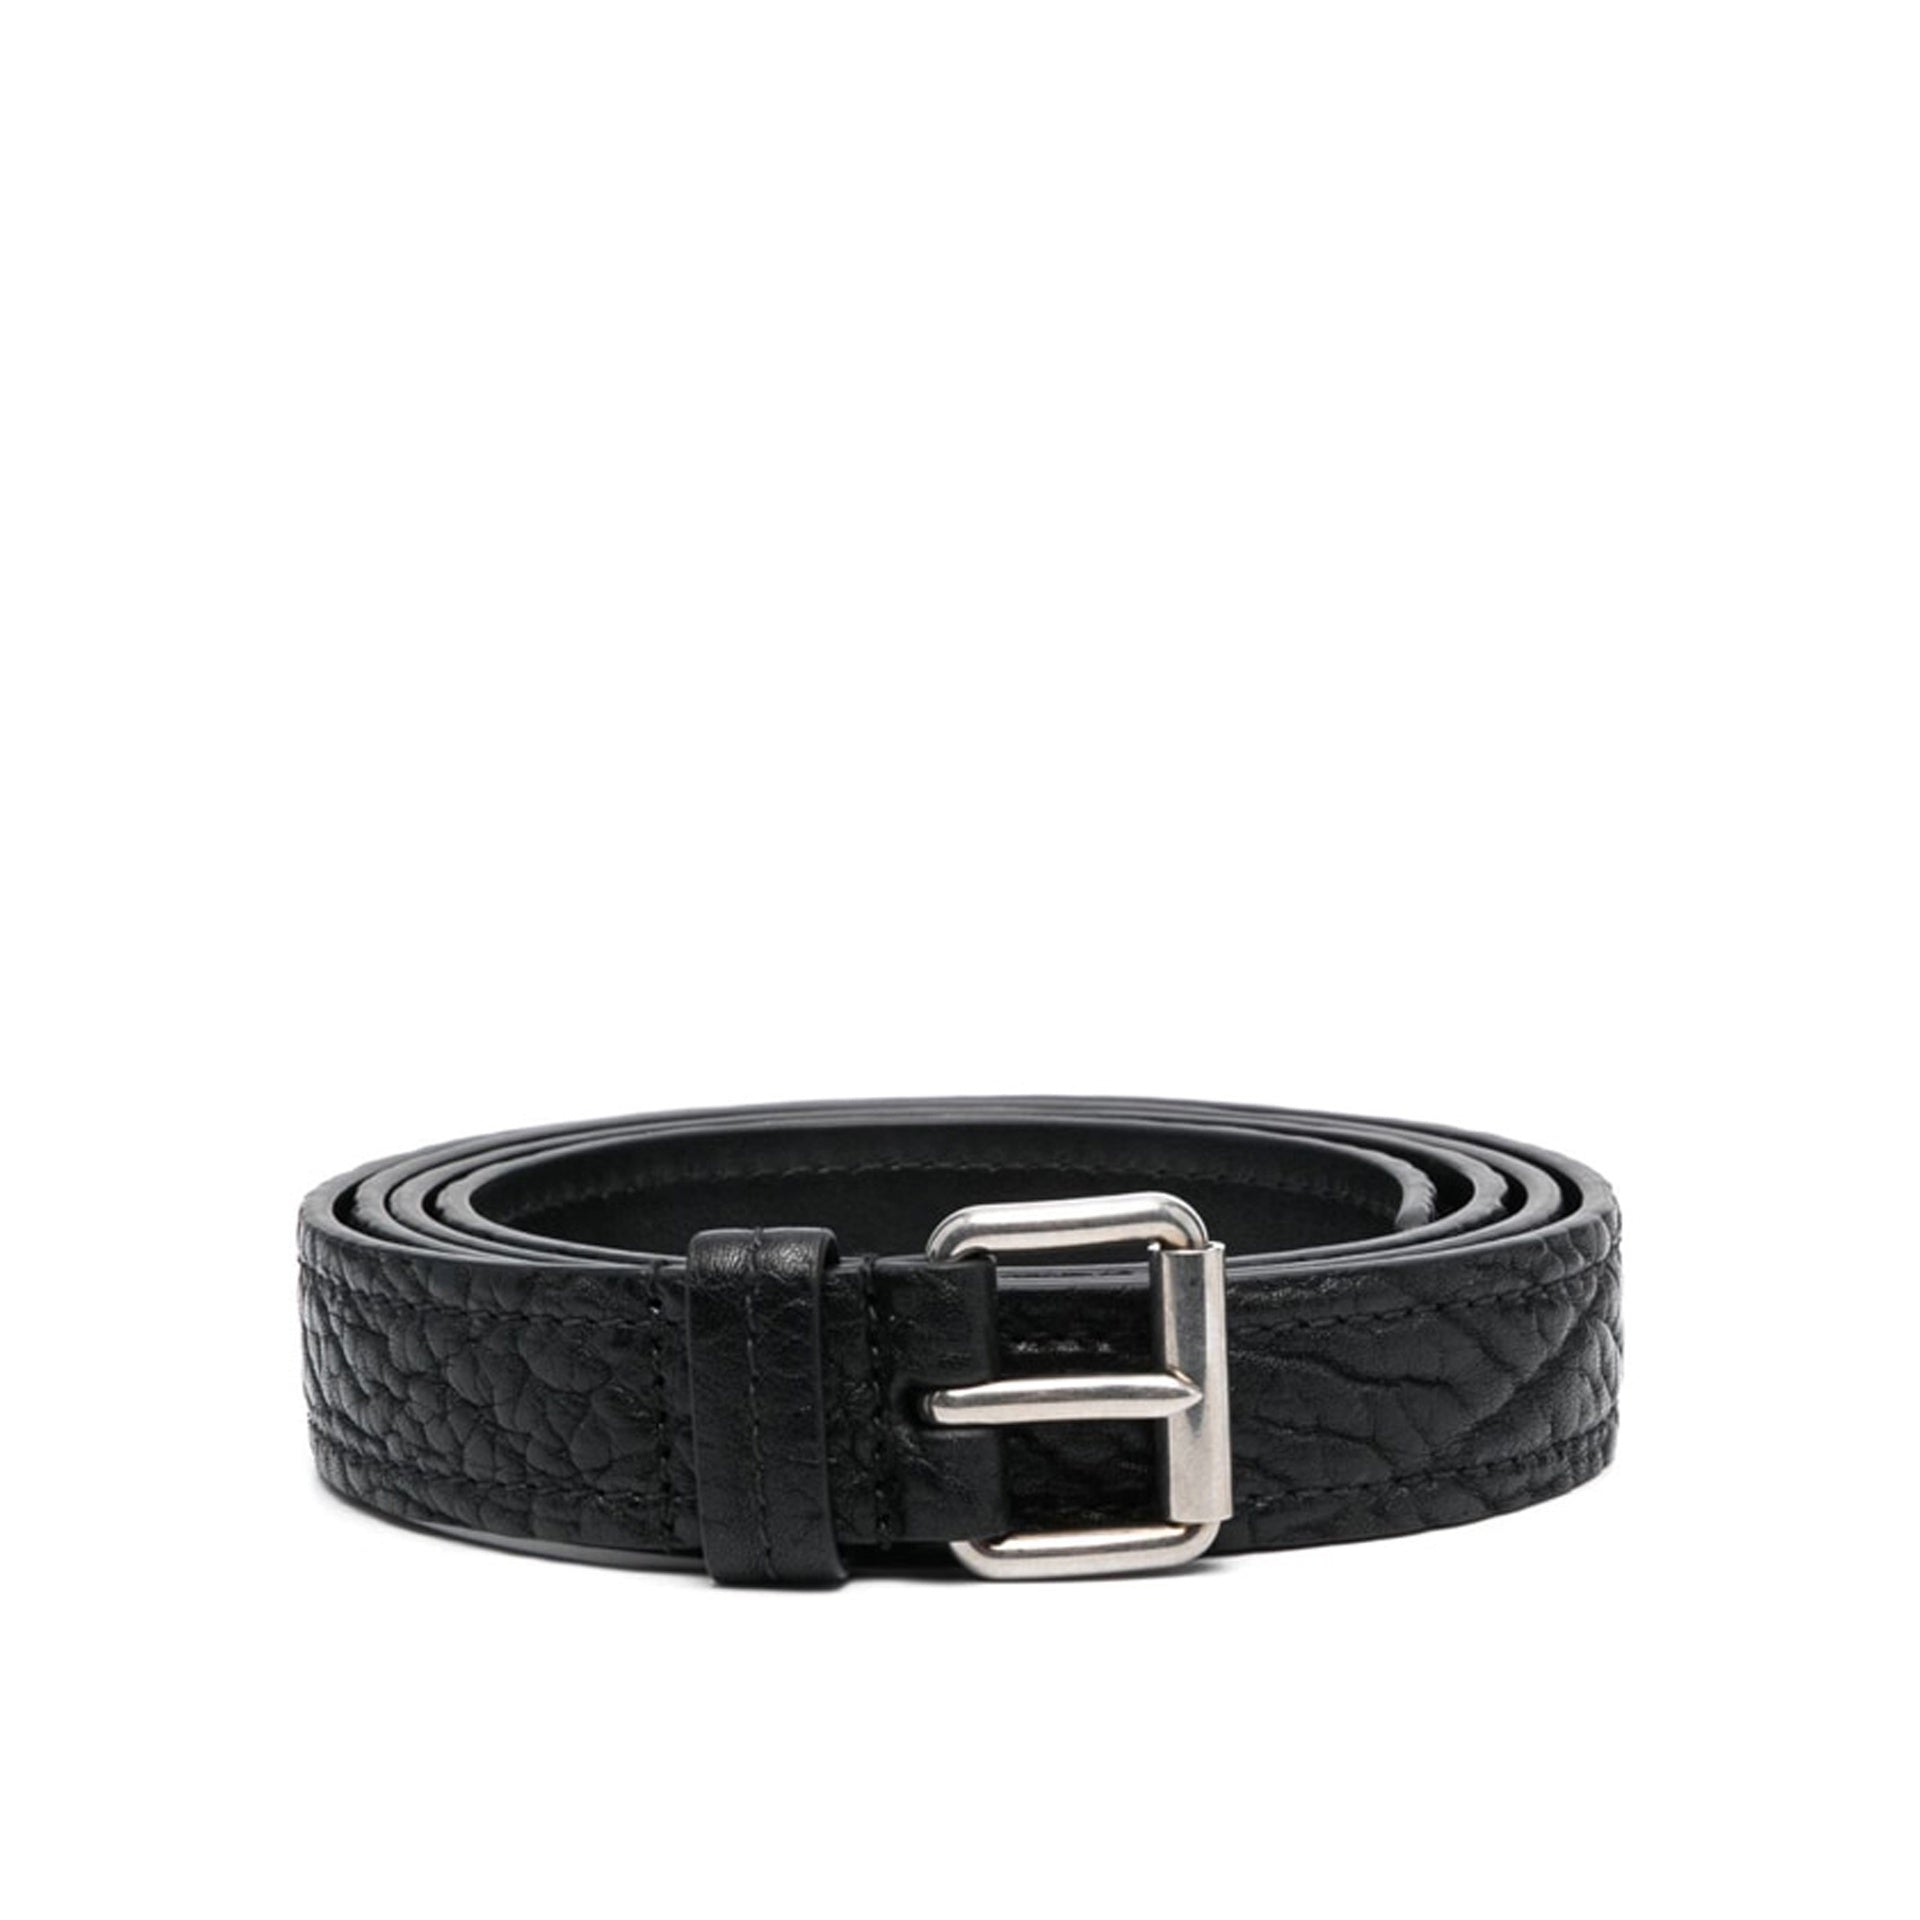 PRADA-Outlet-Sale-PRADA Leather Belt-MEN ACCESSORIES-BLACK-90-ARCHIVIST